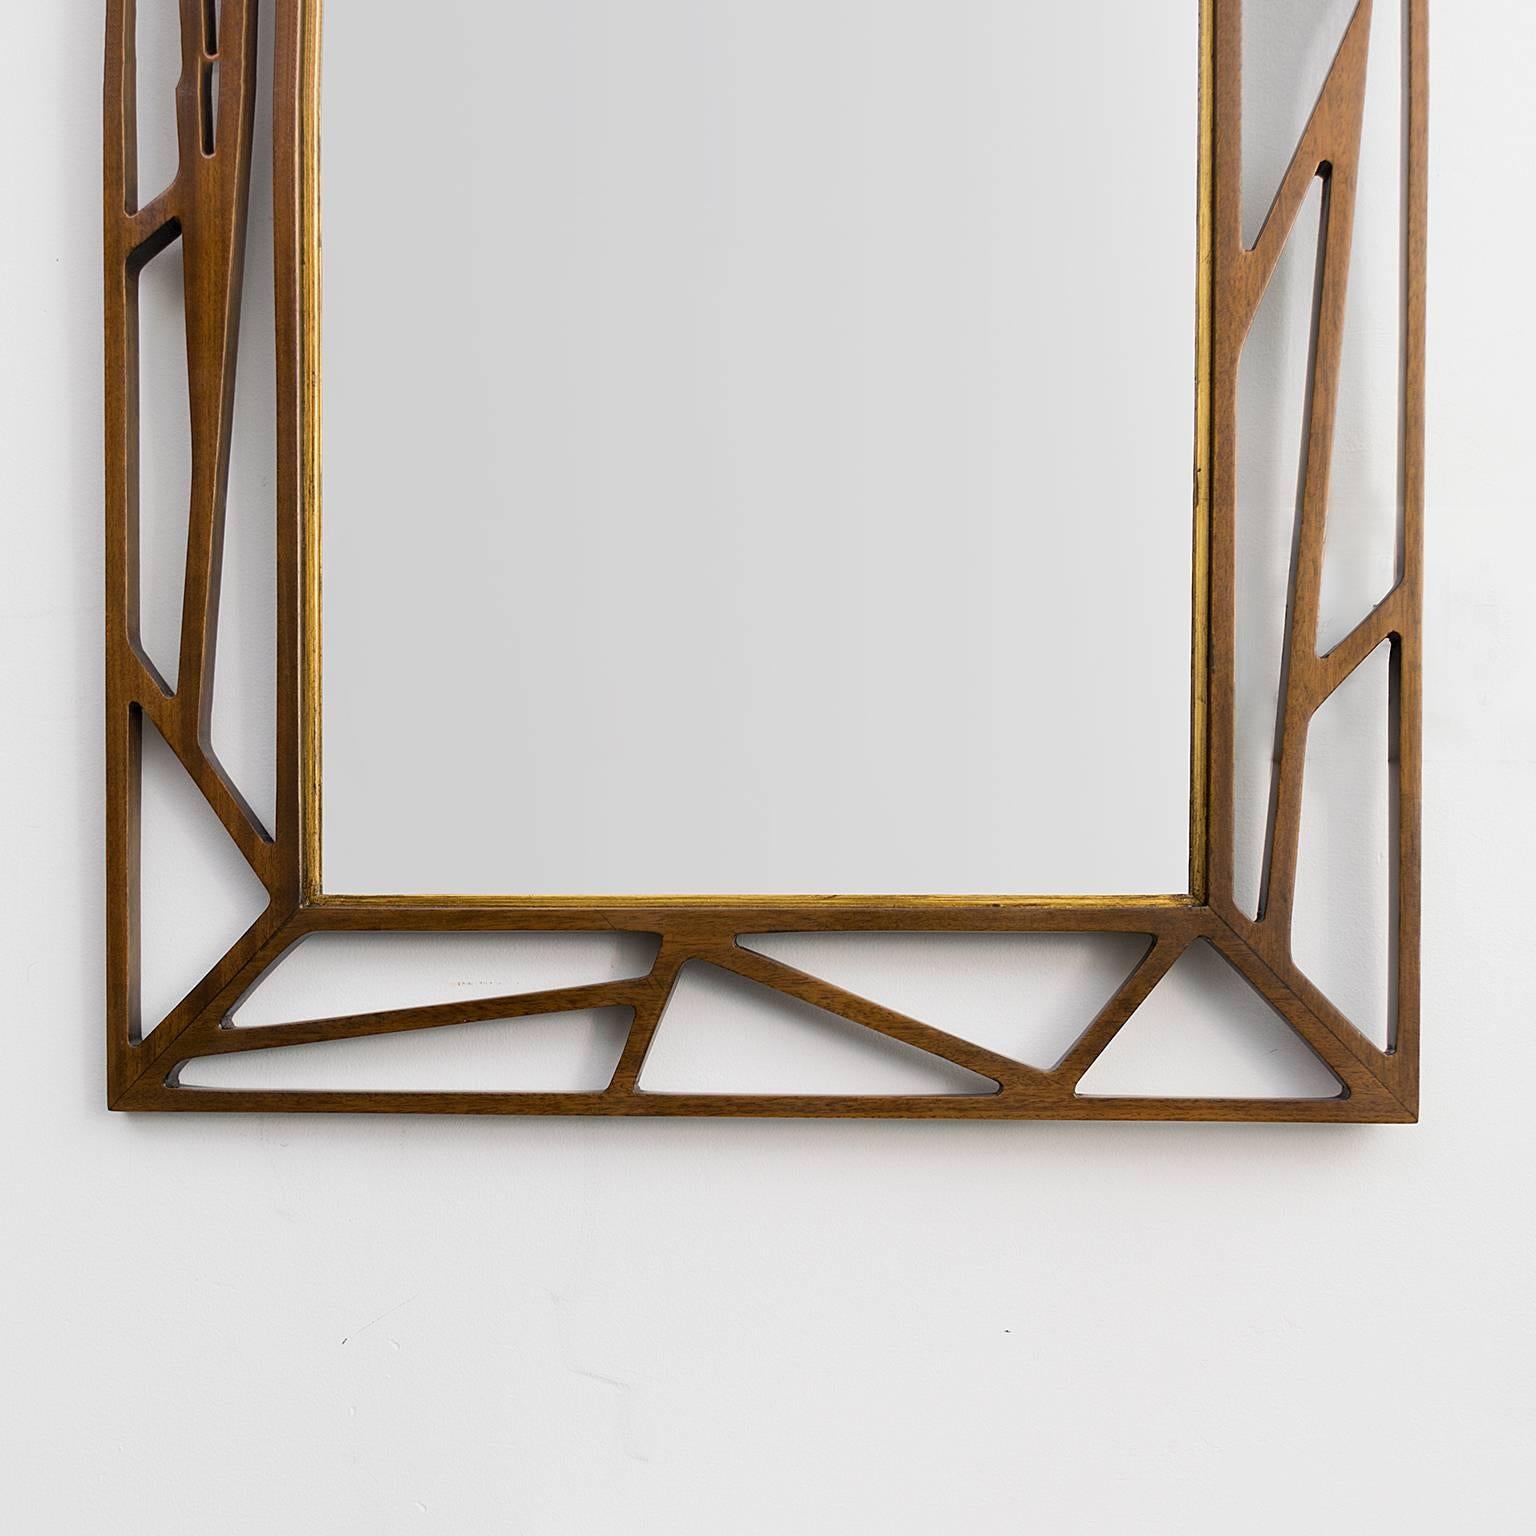 20th Century Scandinavian Modern Eden Gustaf Mirror with Stained Wood Frame